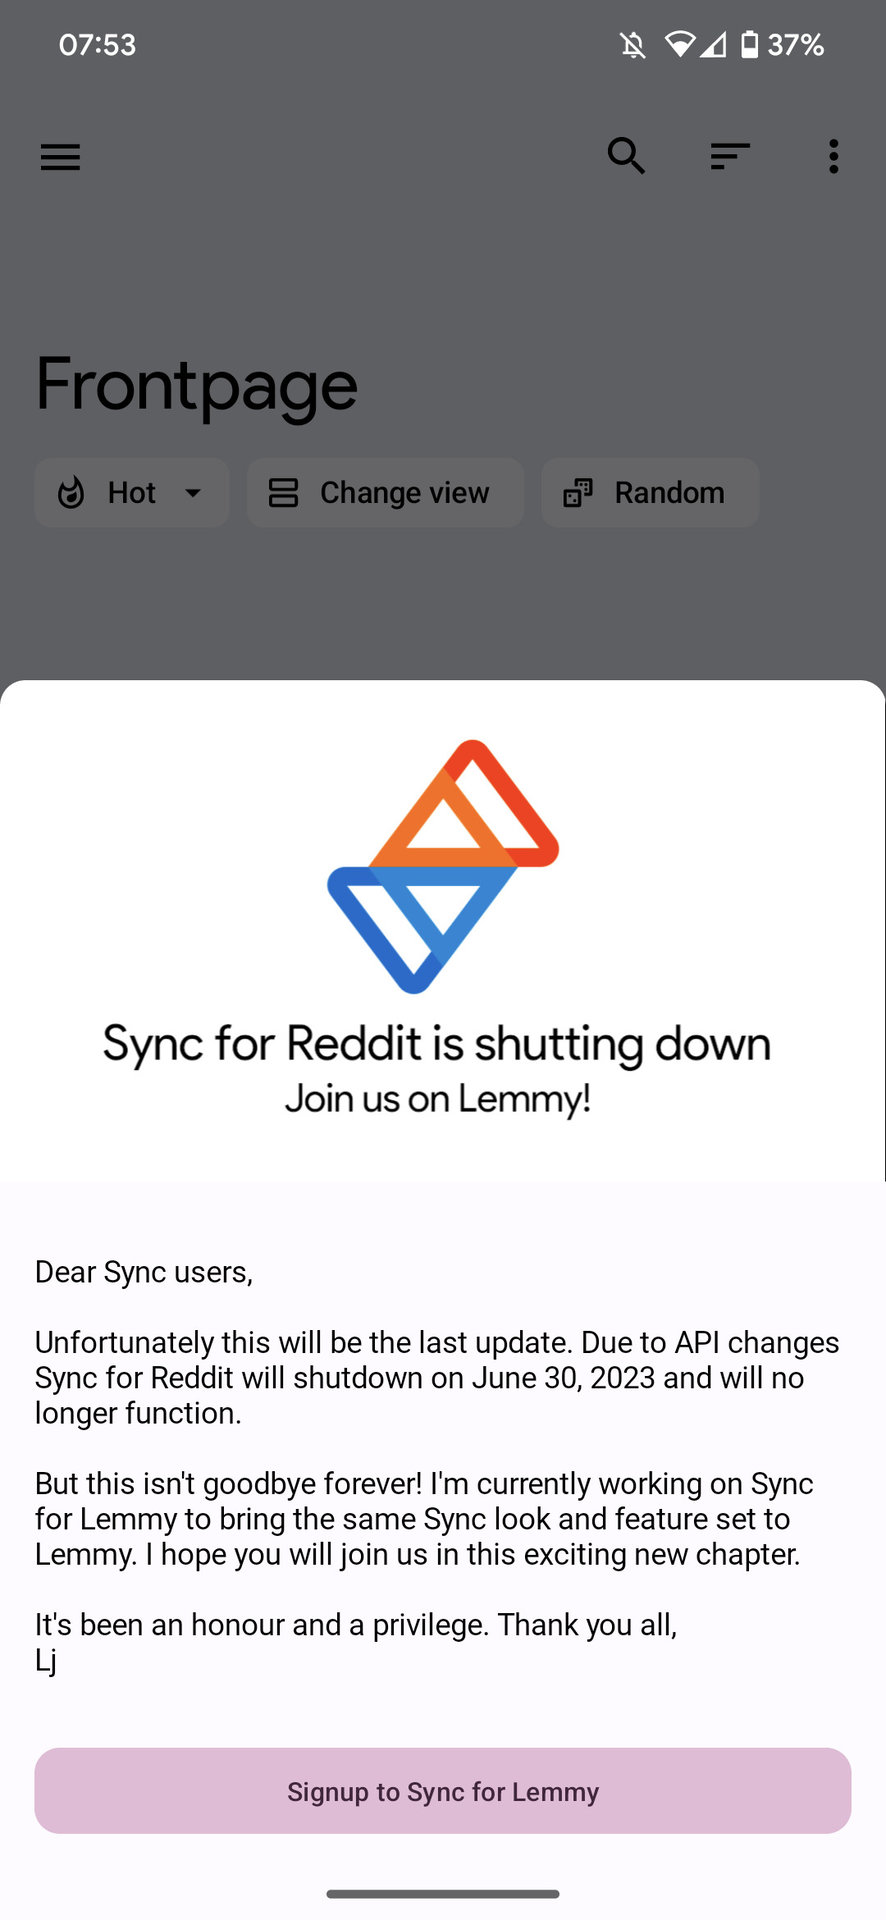 Sync for Reddit shut down message